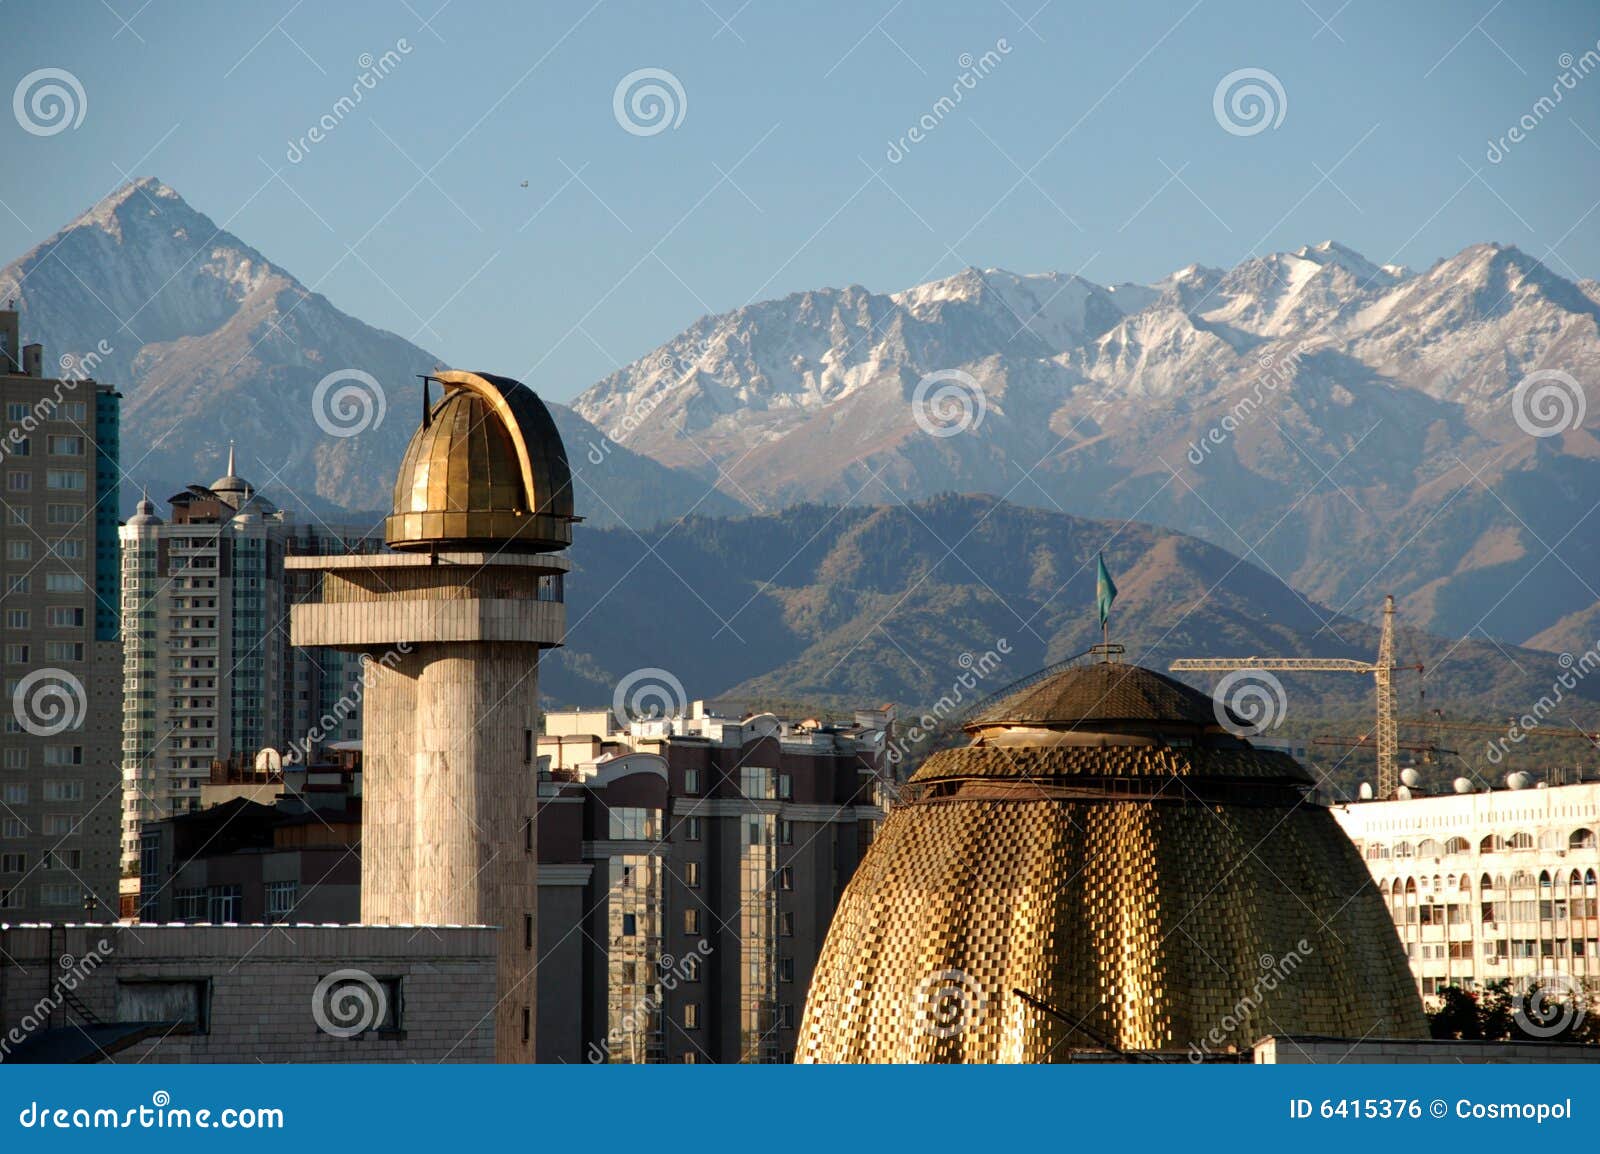 city and high mountains almaty kazakhstan